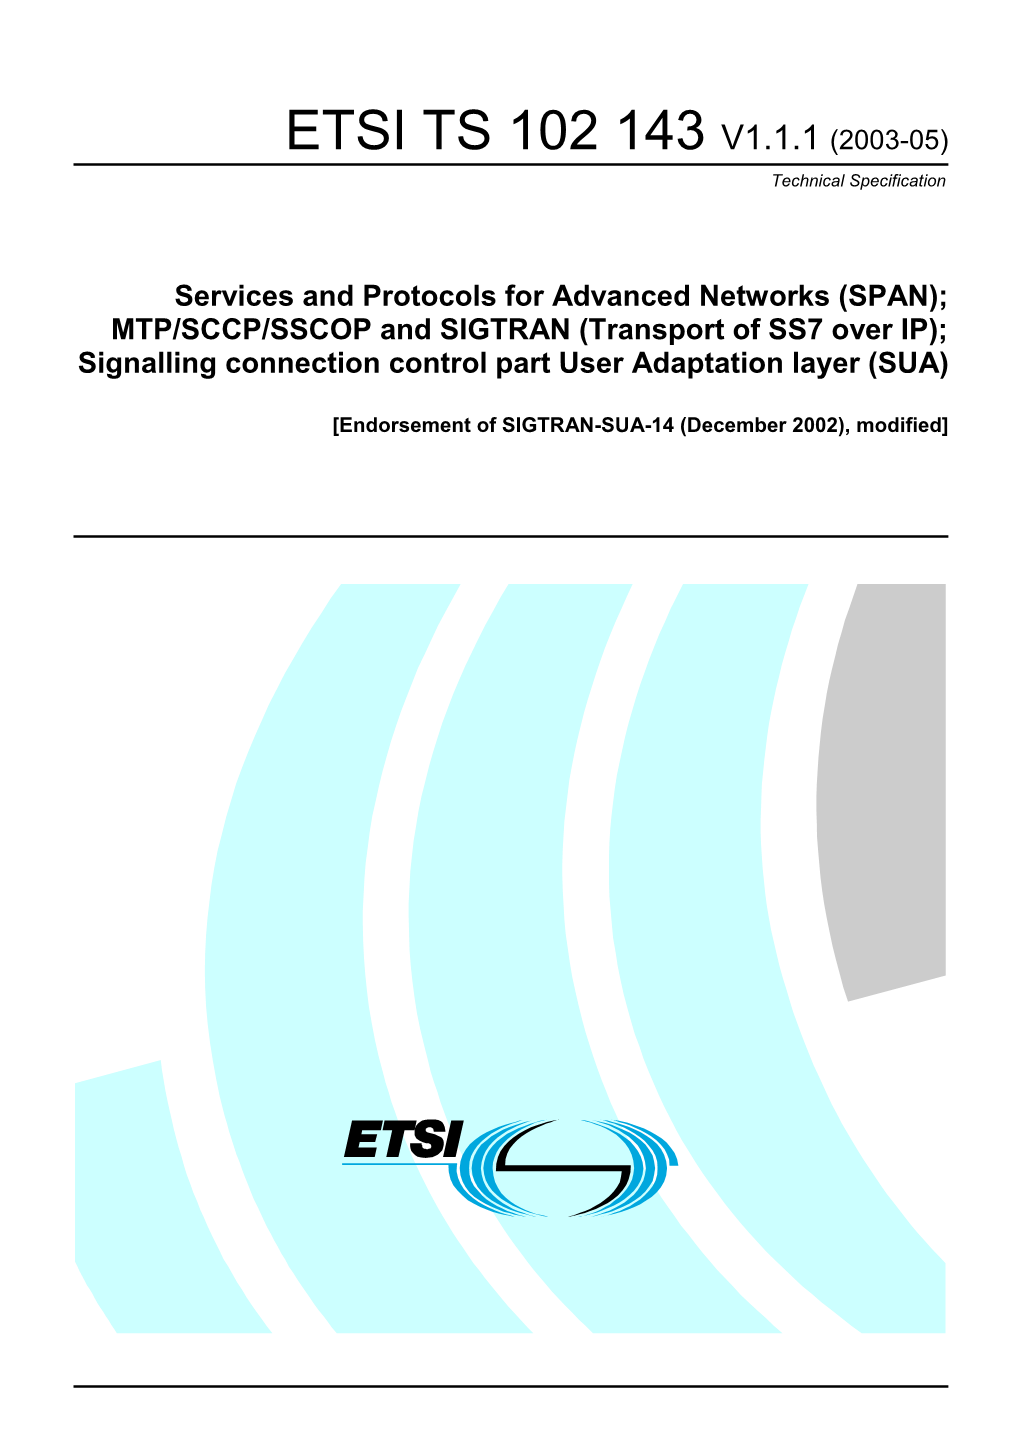 ETSI TS 102 143 V1.1.1 (2003-05) Technical Specification